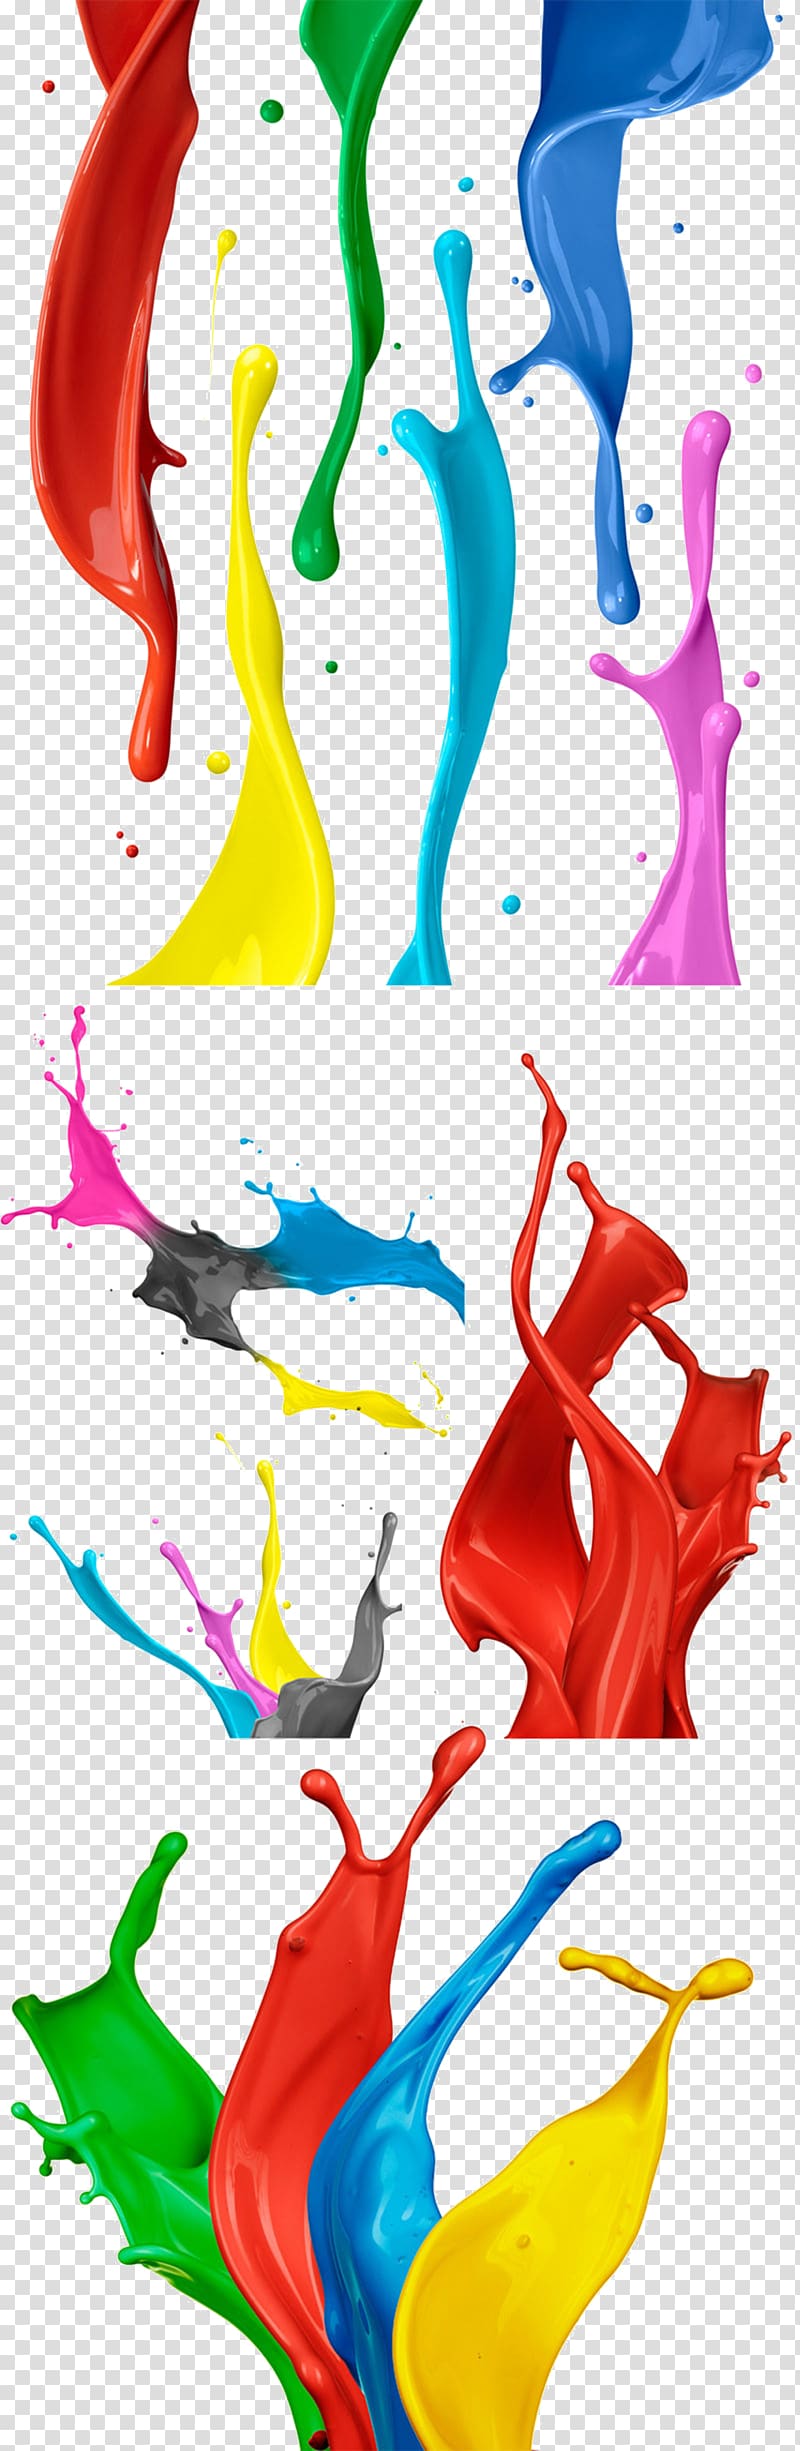 5 kinds of color paint splashes transparent background PNG clipart